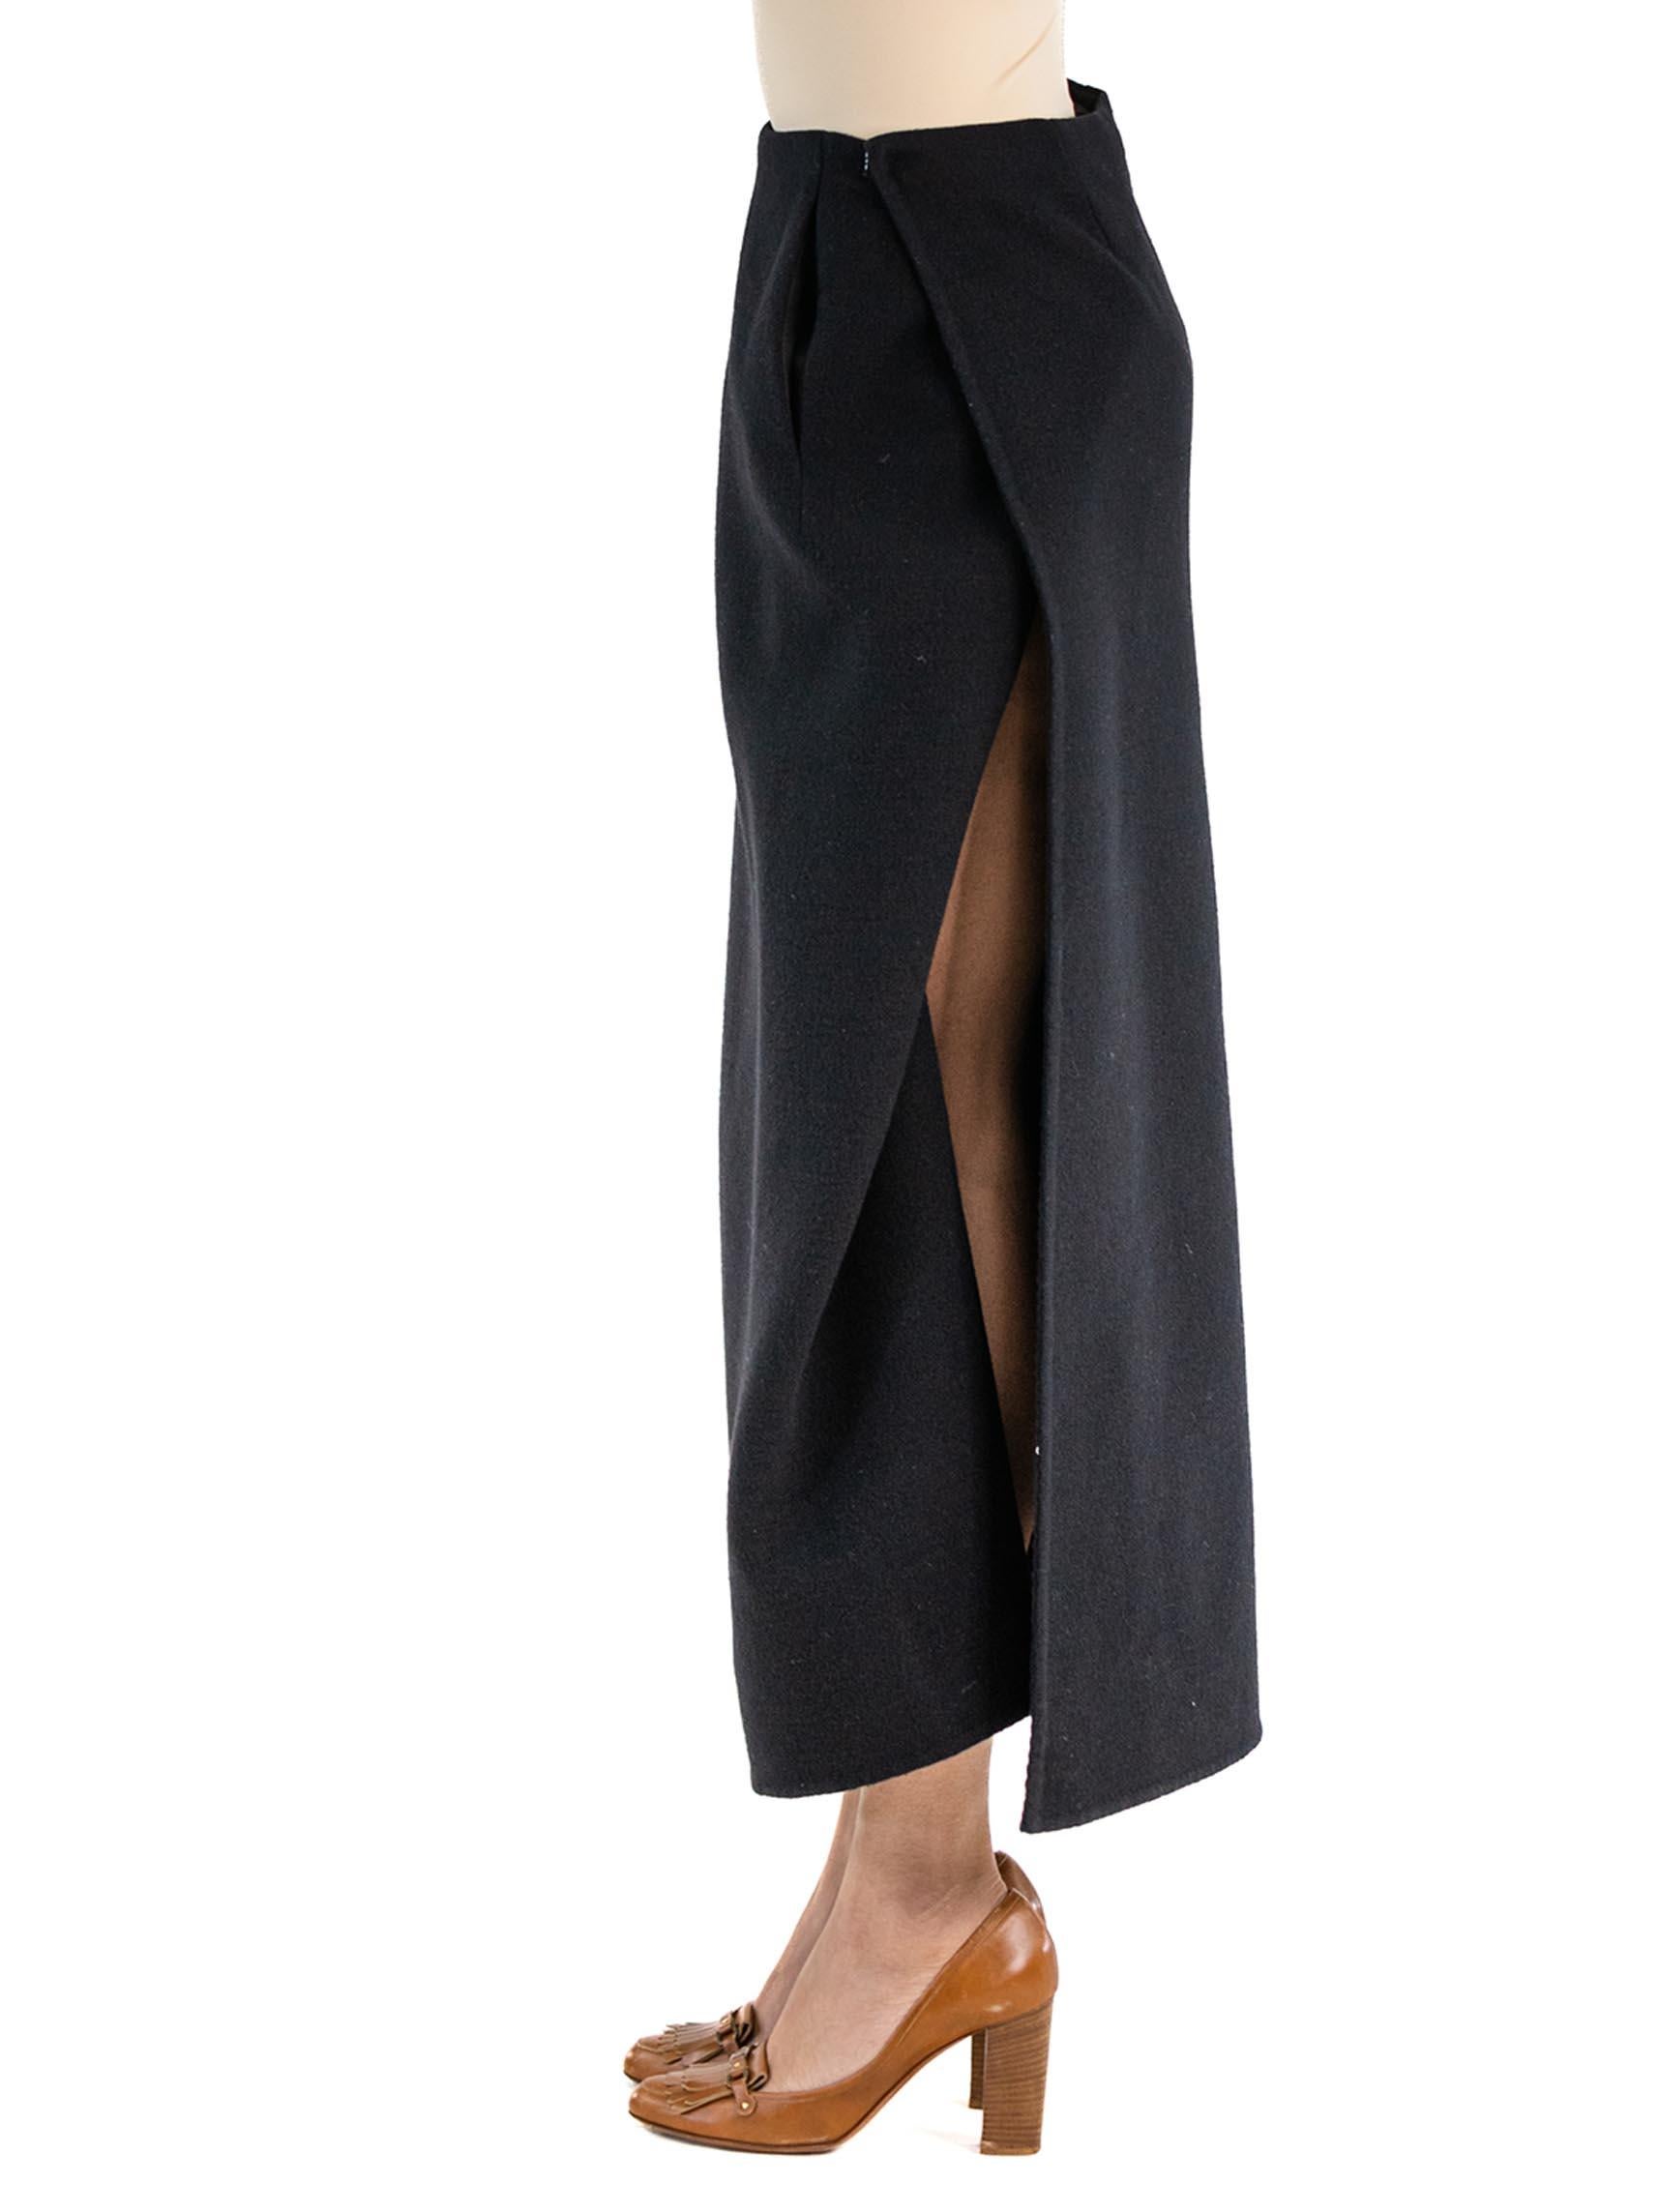 2000S DONNA KARAN Black Wool Flannel Wrap Skirt 6